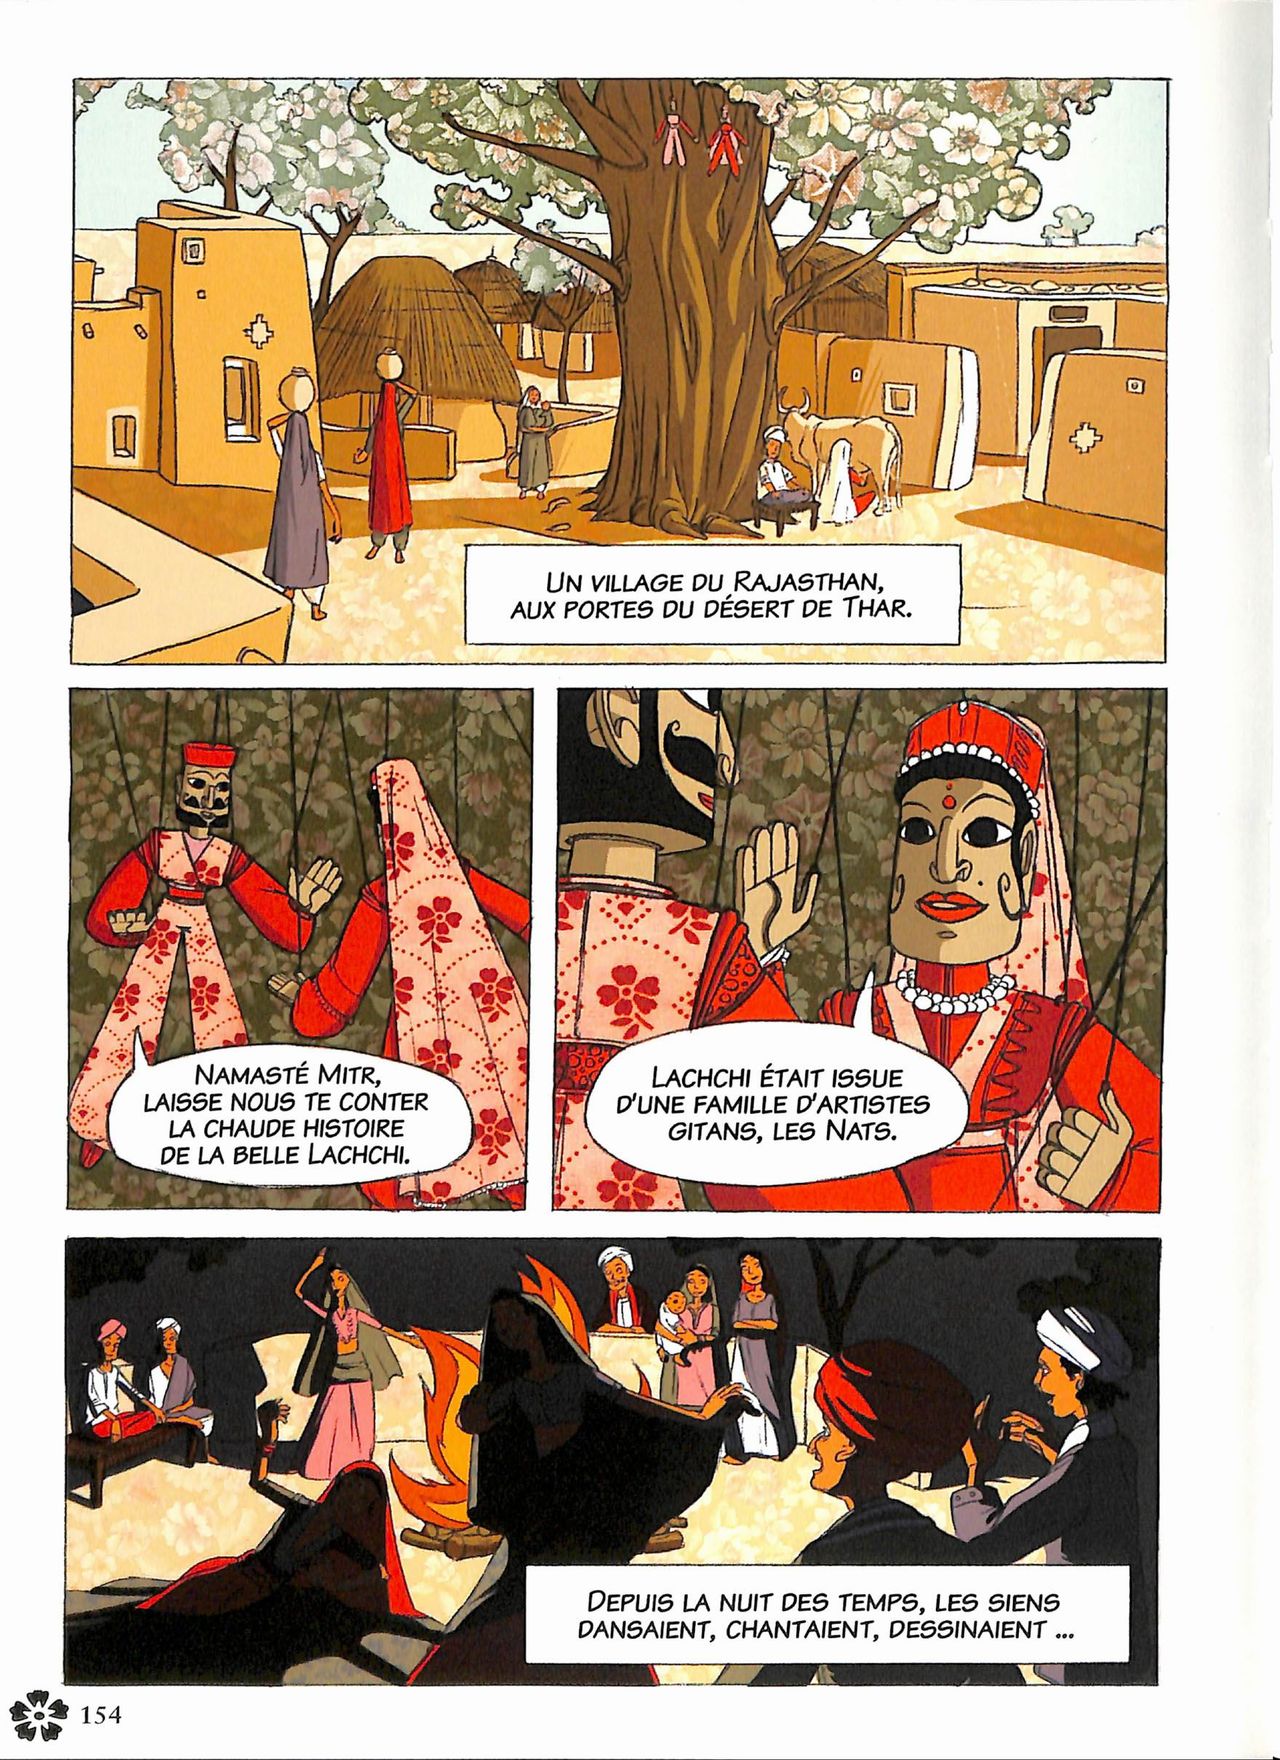 Kama Sutra en bandes dessinées - Kama Sutra with Comics numero d'image 154